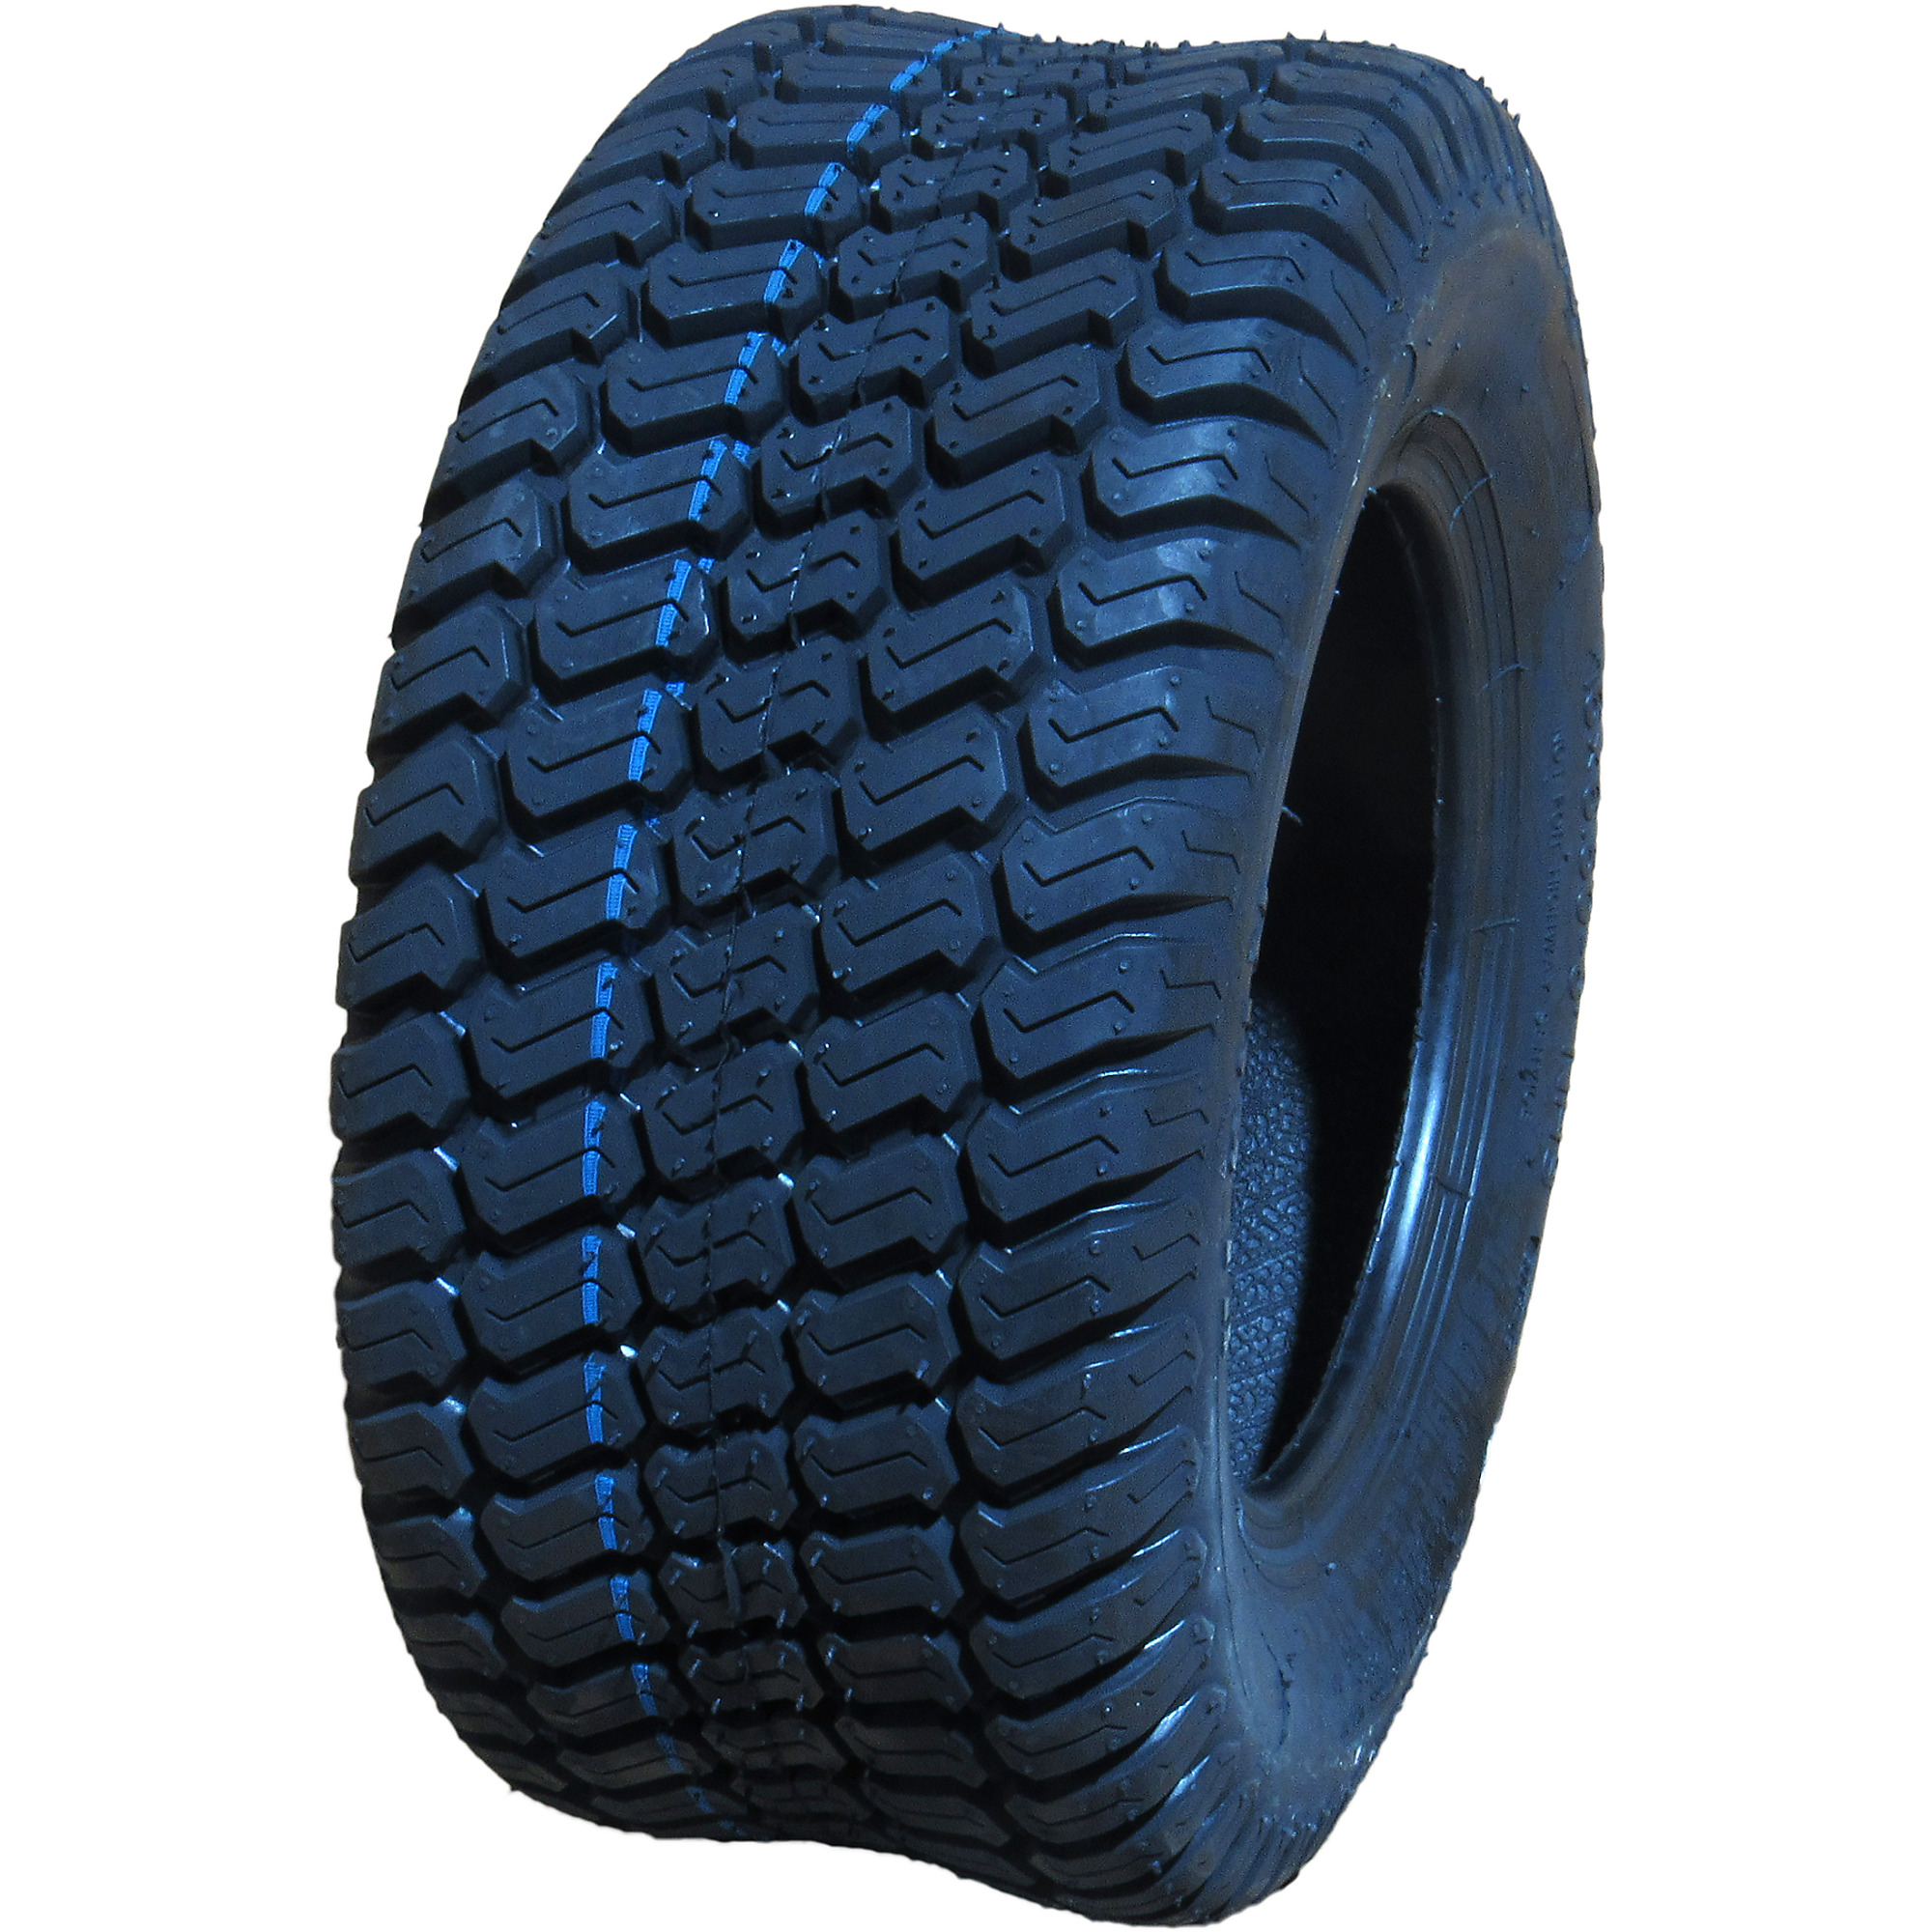 HI-RUN, Lawn Garden Tire, SU05 Turf, Tire Size 16X6.50-8 Load Range Rating B, Model WD1125